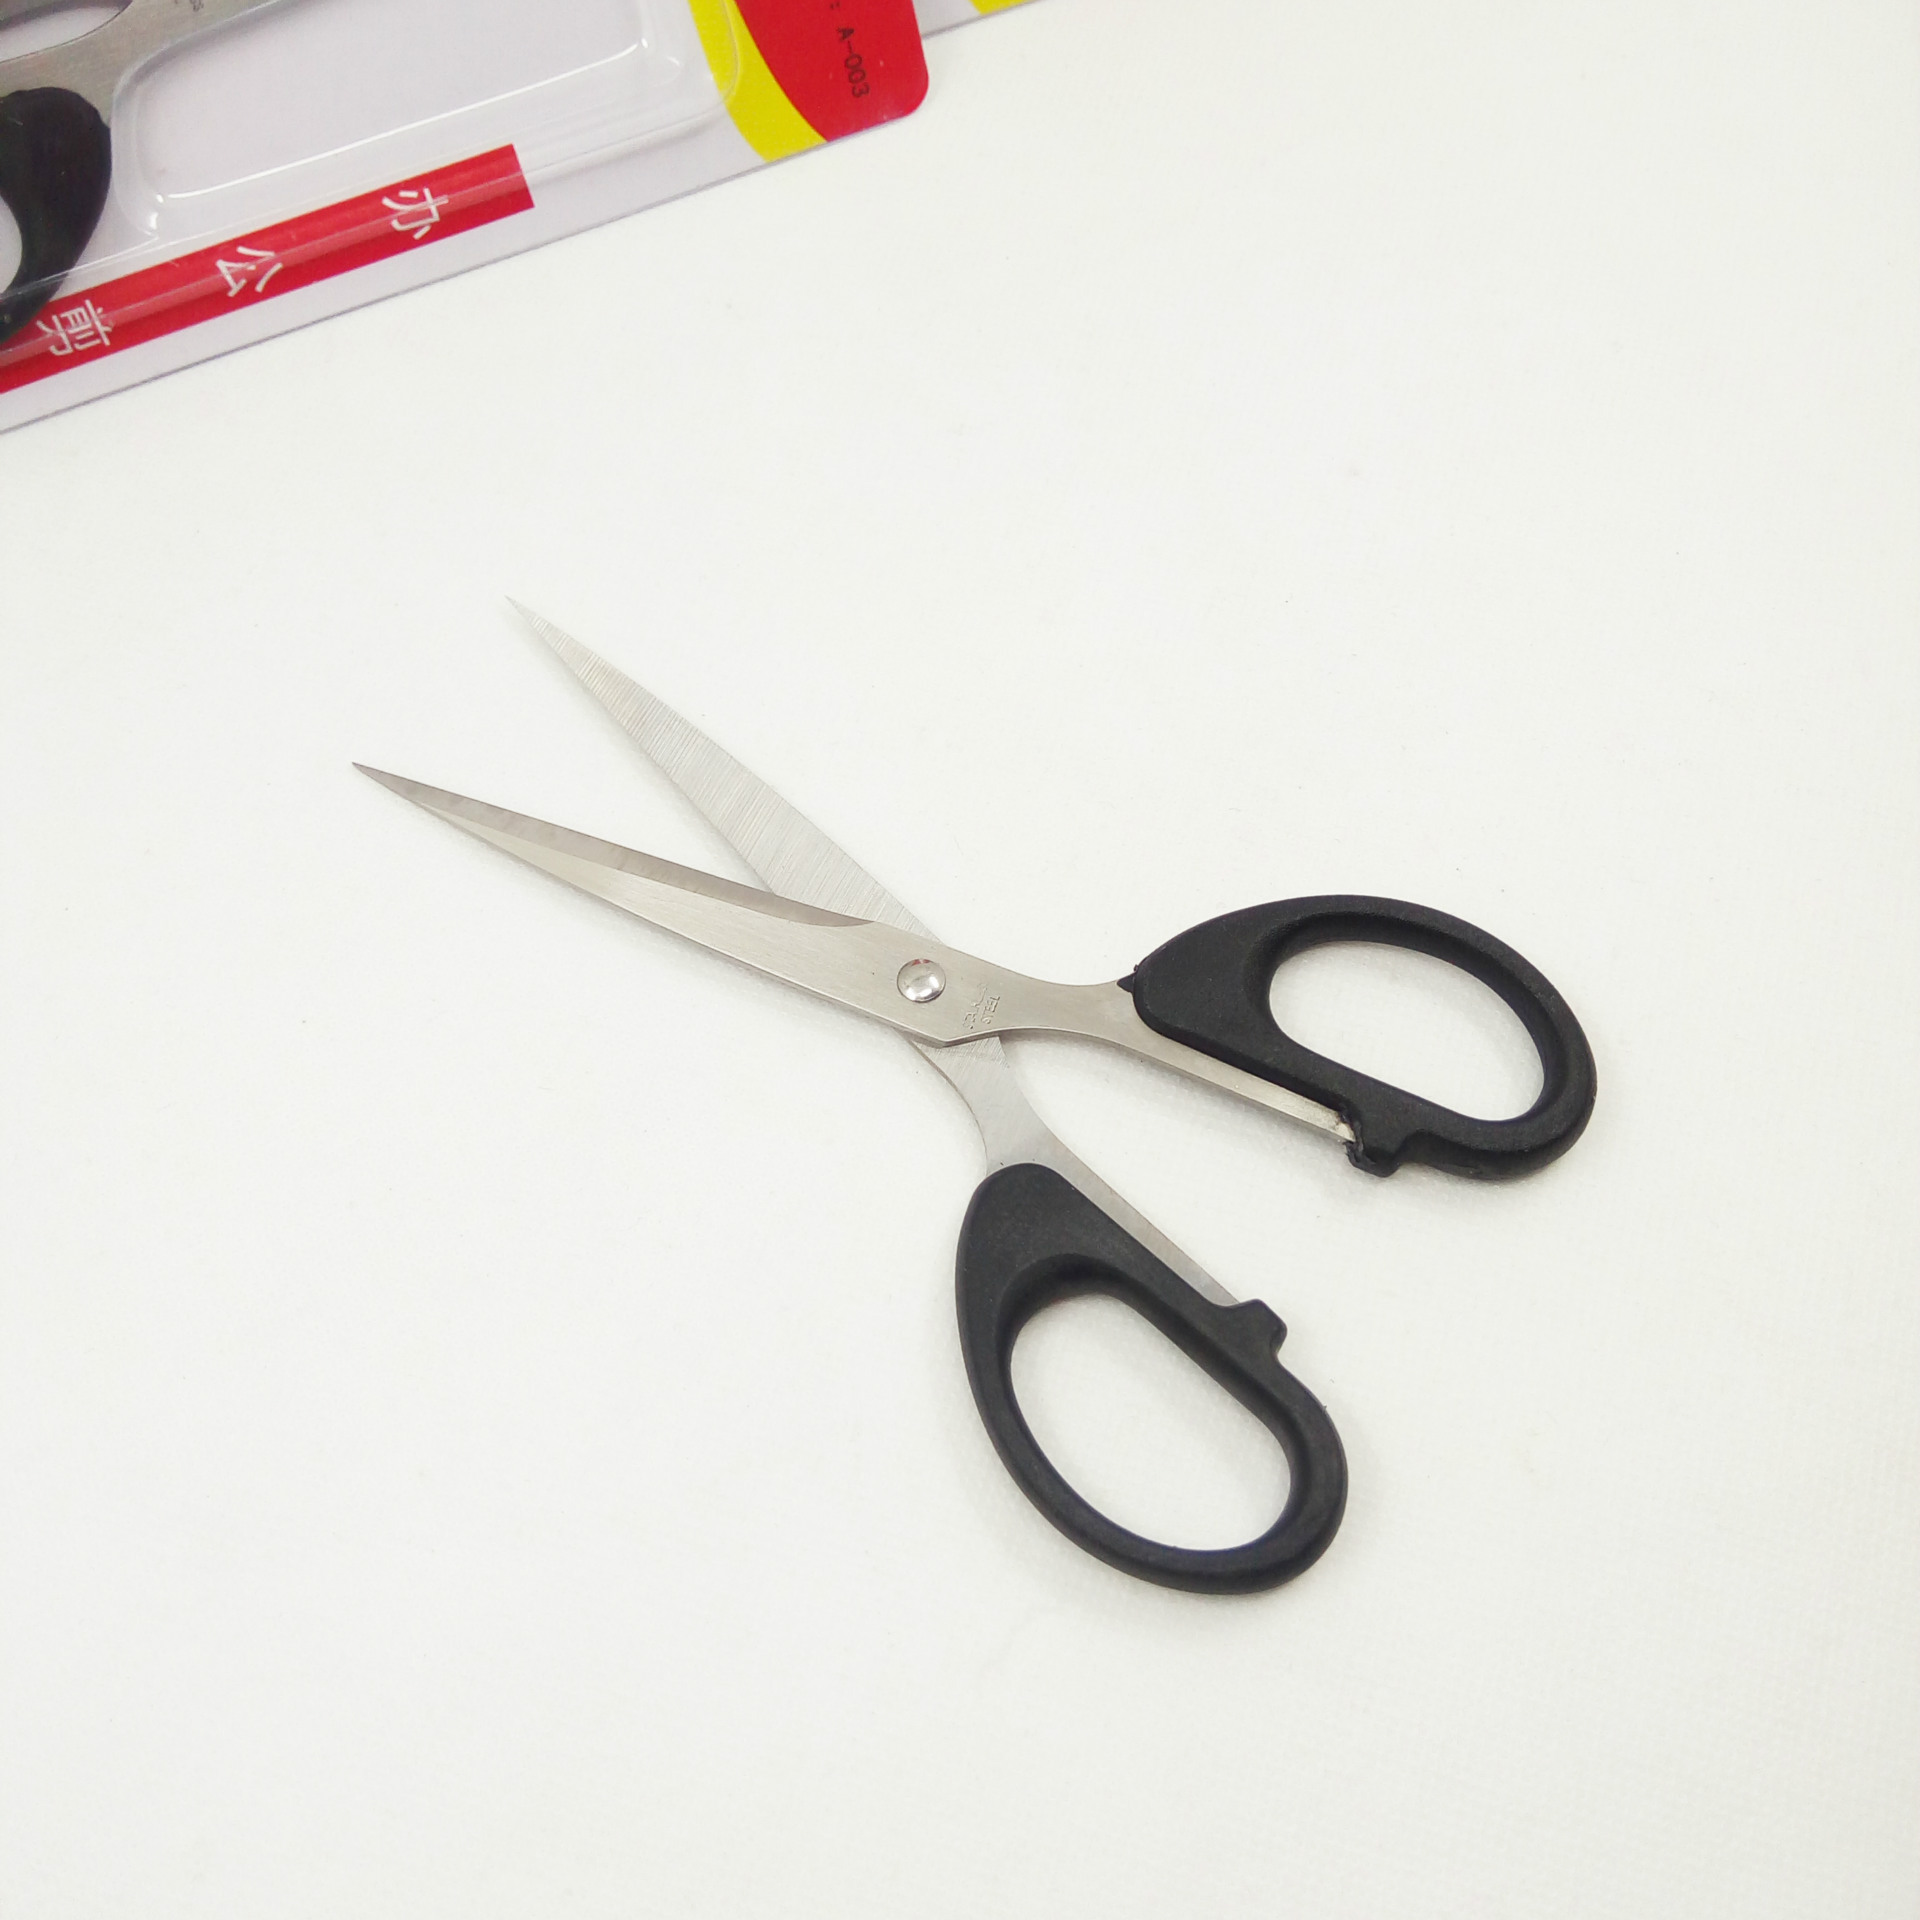 3pcs lot stainless steel stationery scissors full tang design office students art work paper cutting scissors household scissors